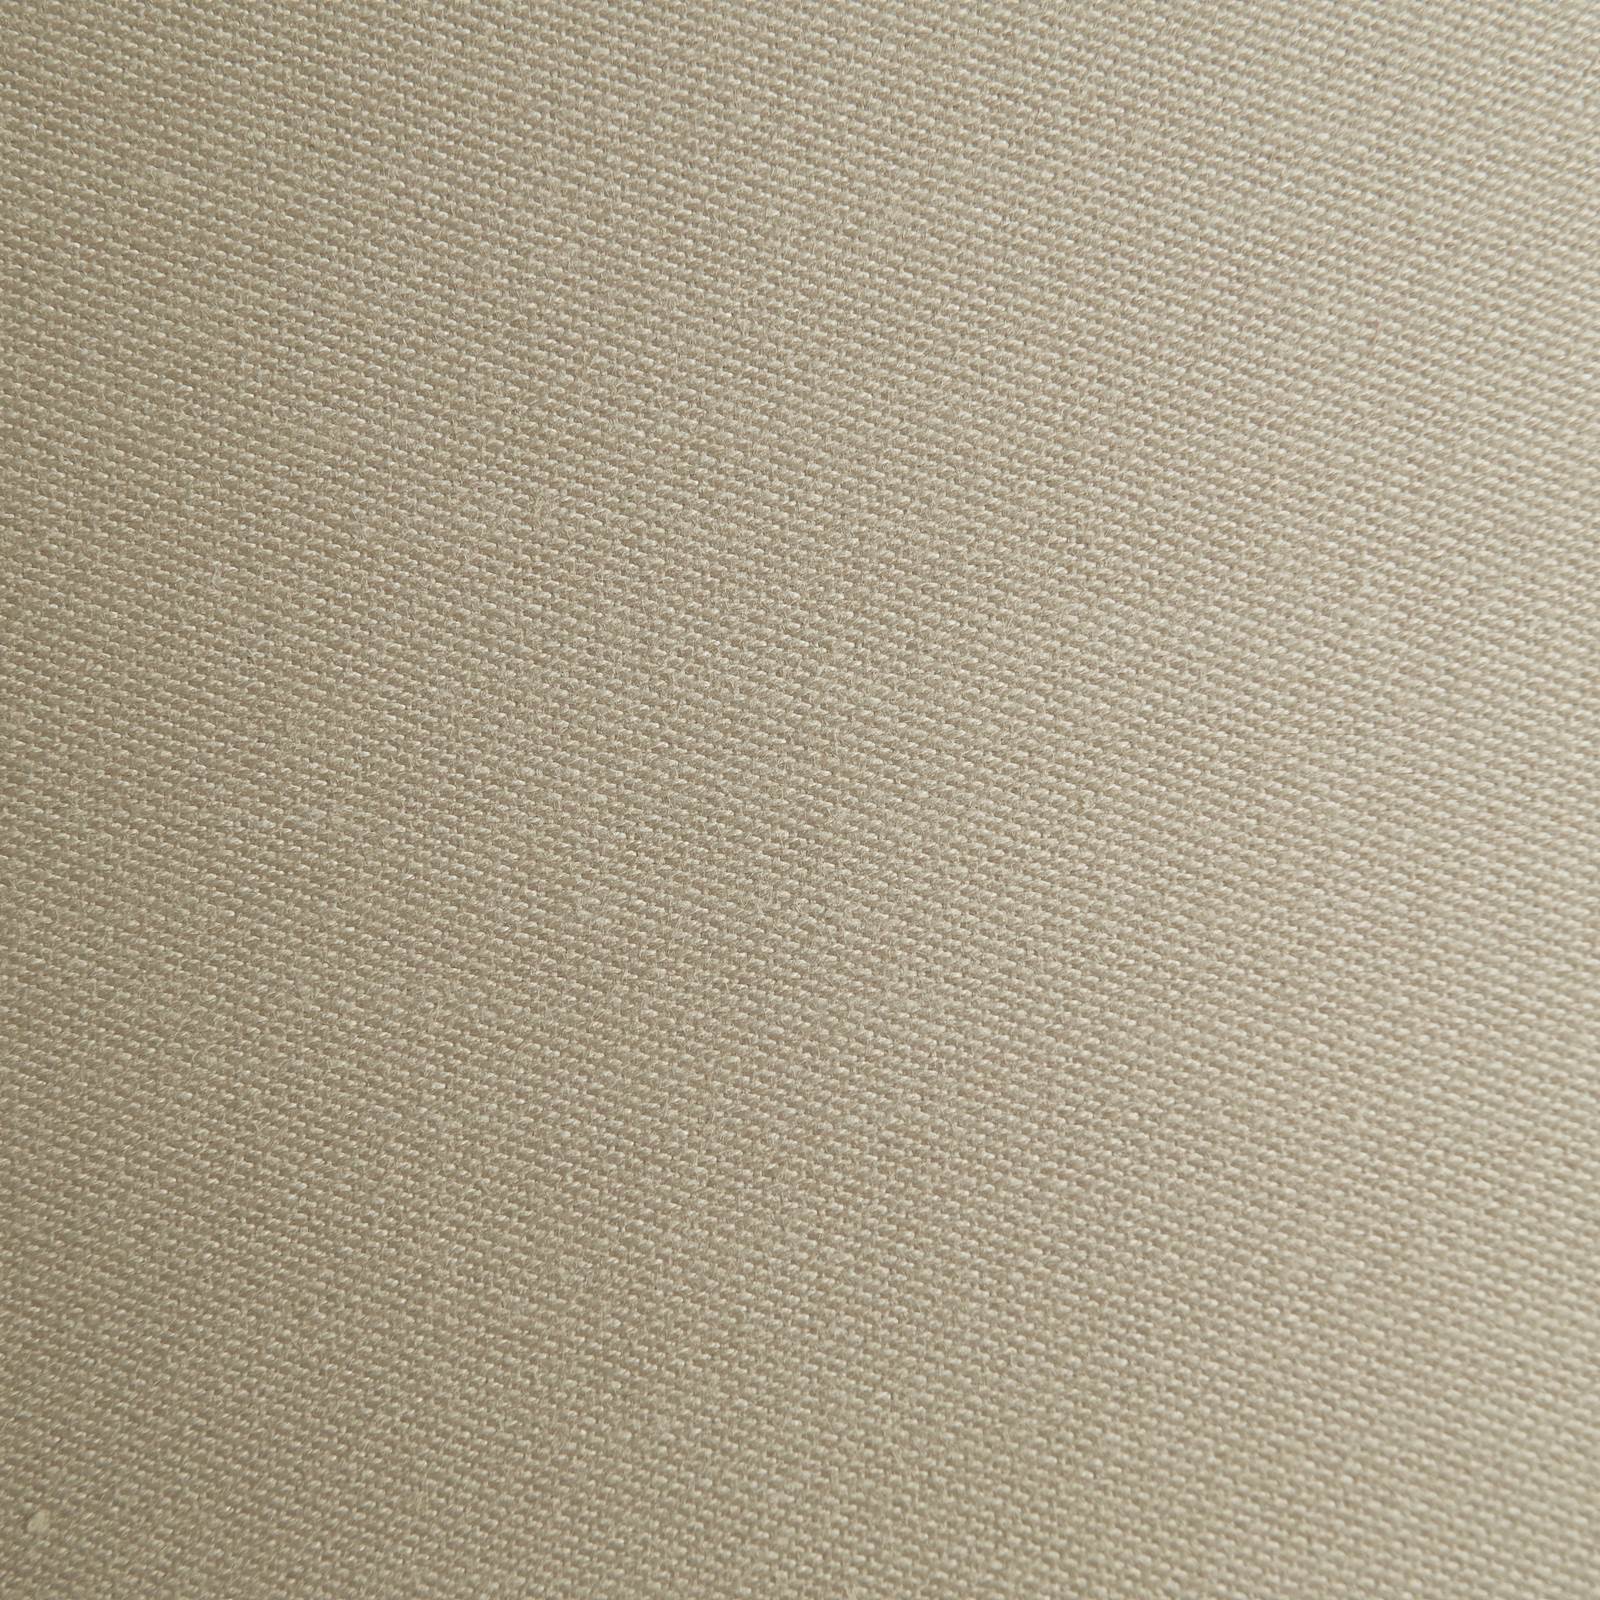 Vera - tela de damasco de dos capas - coloración Indanthren® (piedra)